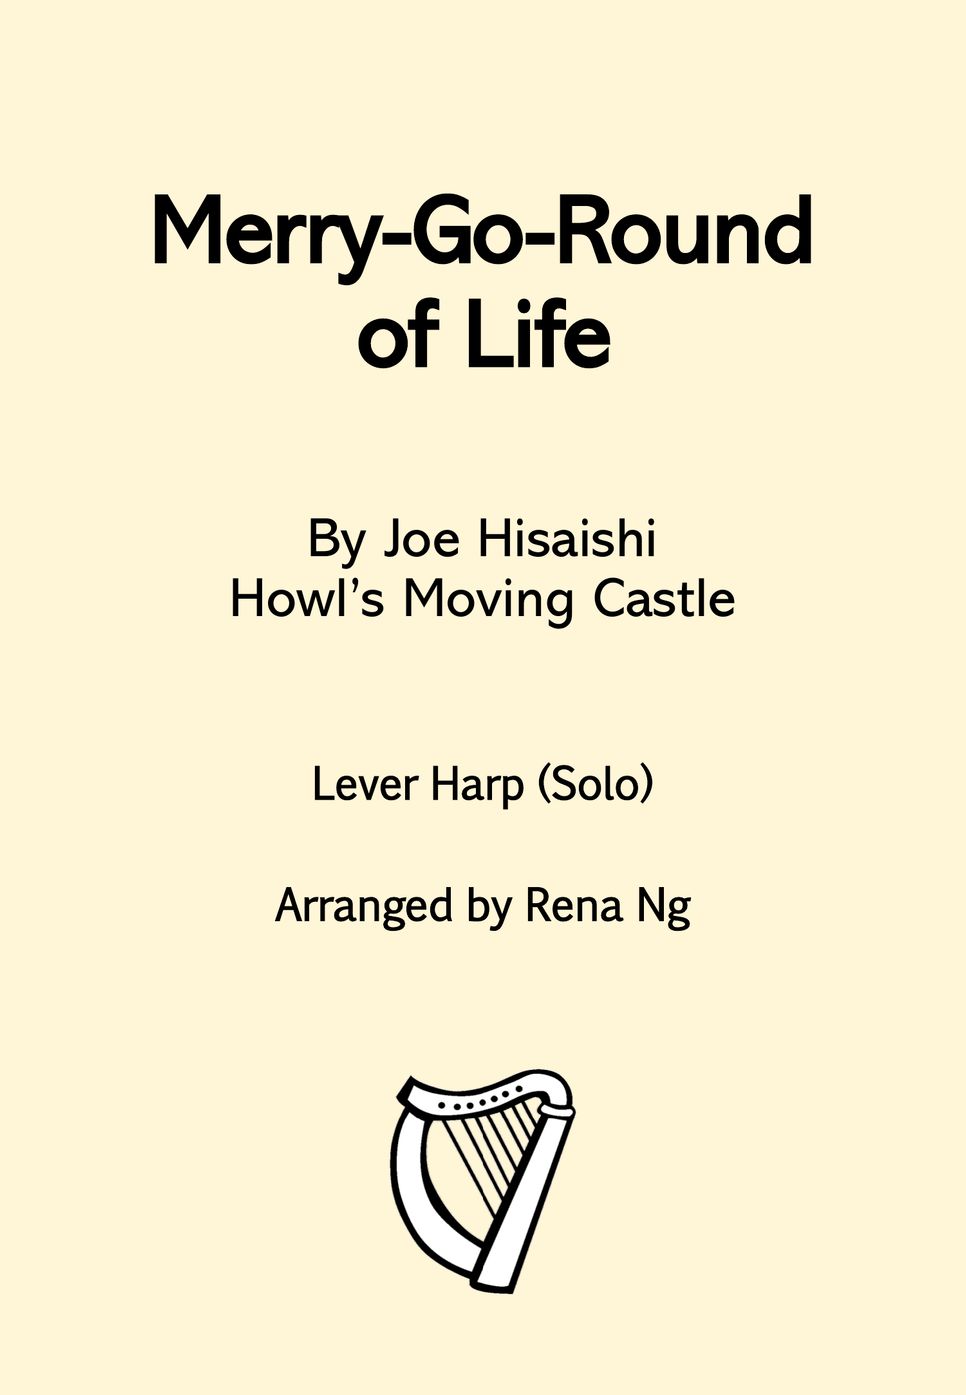 Joe Hisaishi - Merry Go Round of Life (Lever Harp Solo) - Advanced Intermediate ハウルの動く城 / 人生のメリーゴーランド【ハープ】 by Harp With Me